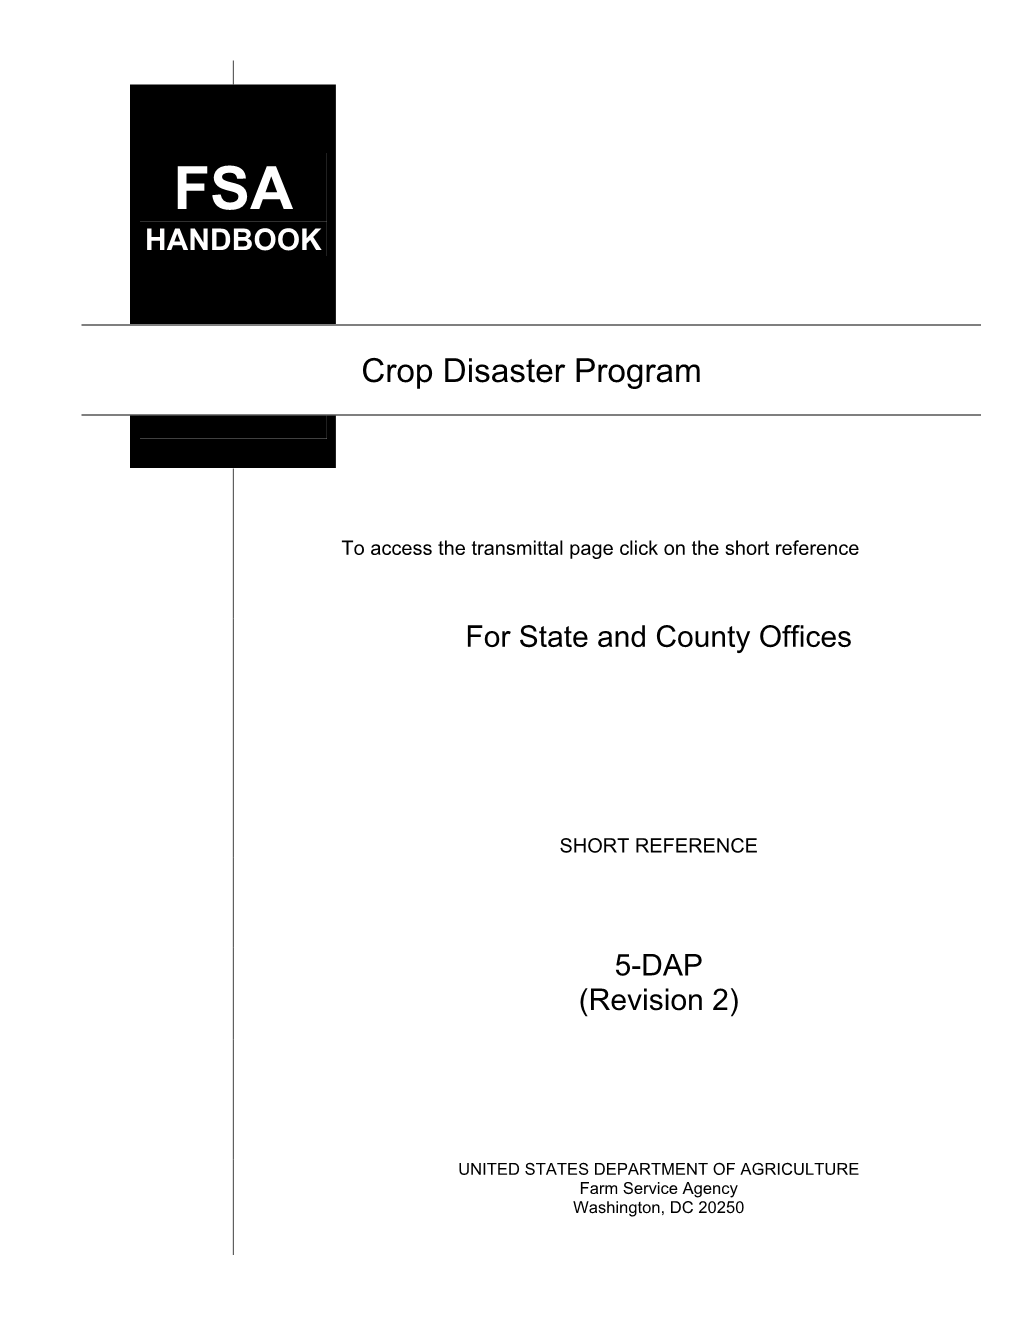 05-DAP R02 A13, Crop Disaster Program